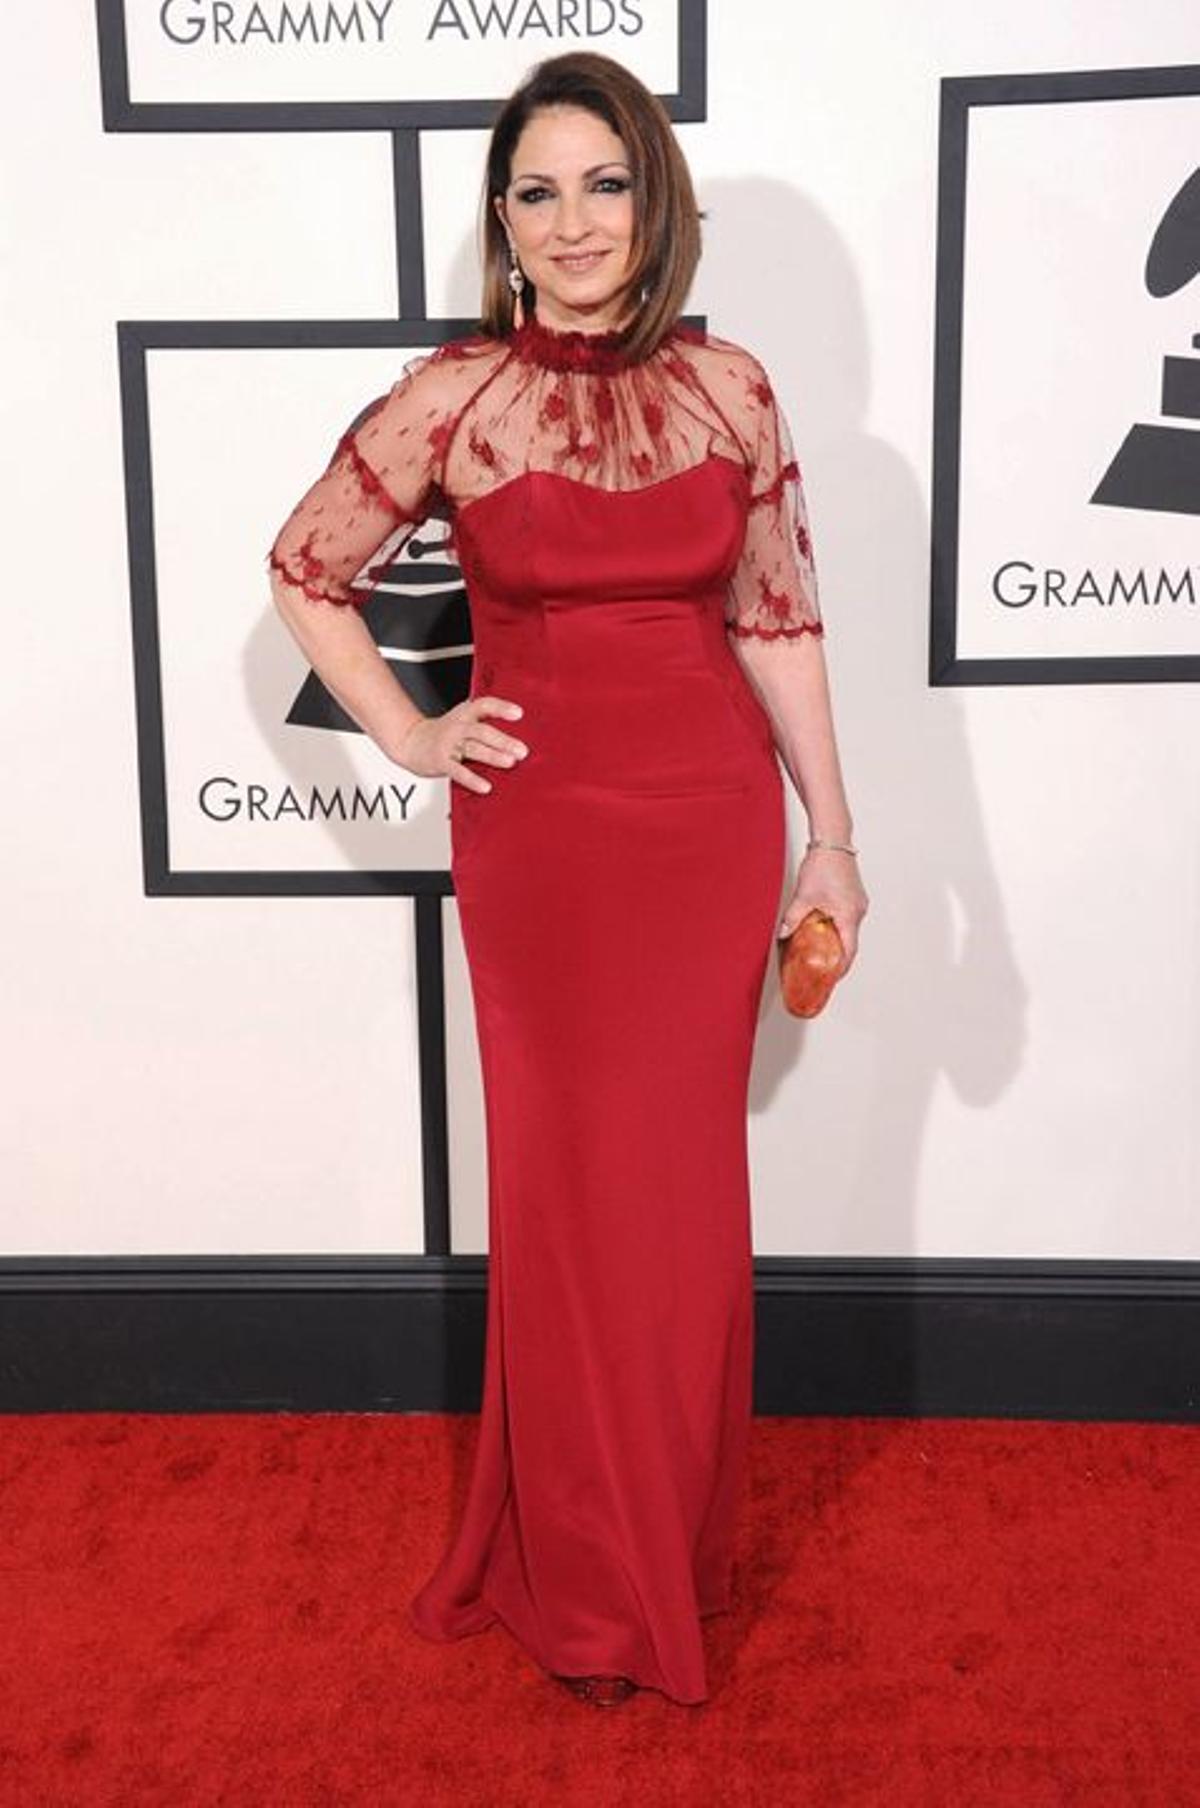 Grammy, permios, música, Beyoncé, pop, 2014, alfombra roja, fotos, cantantes